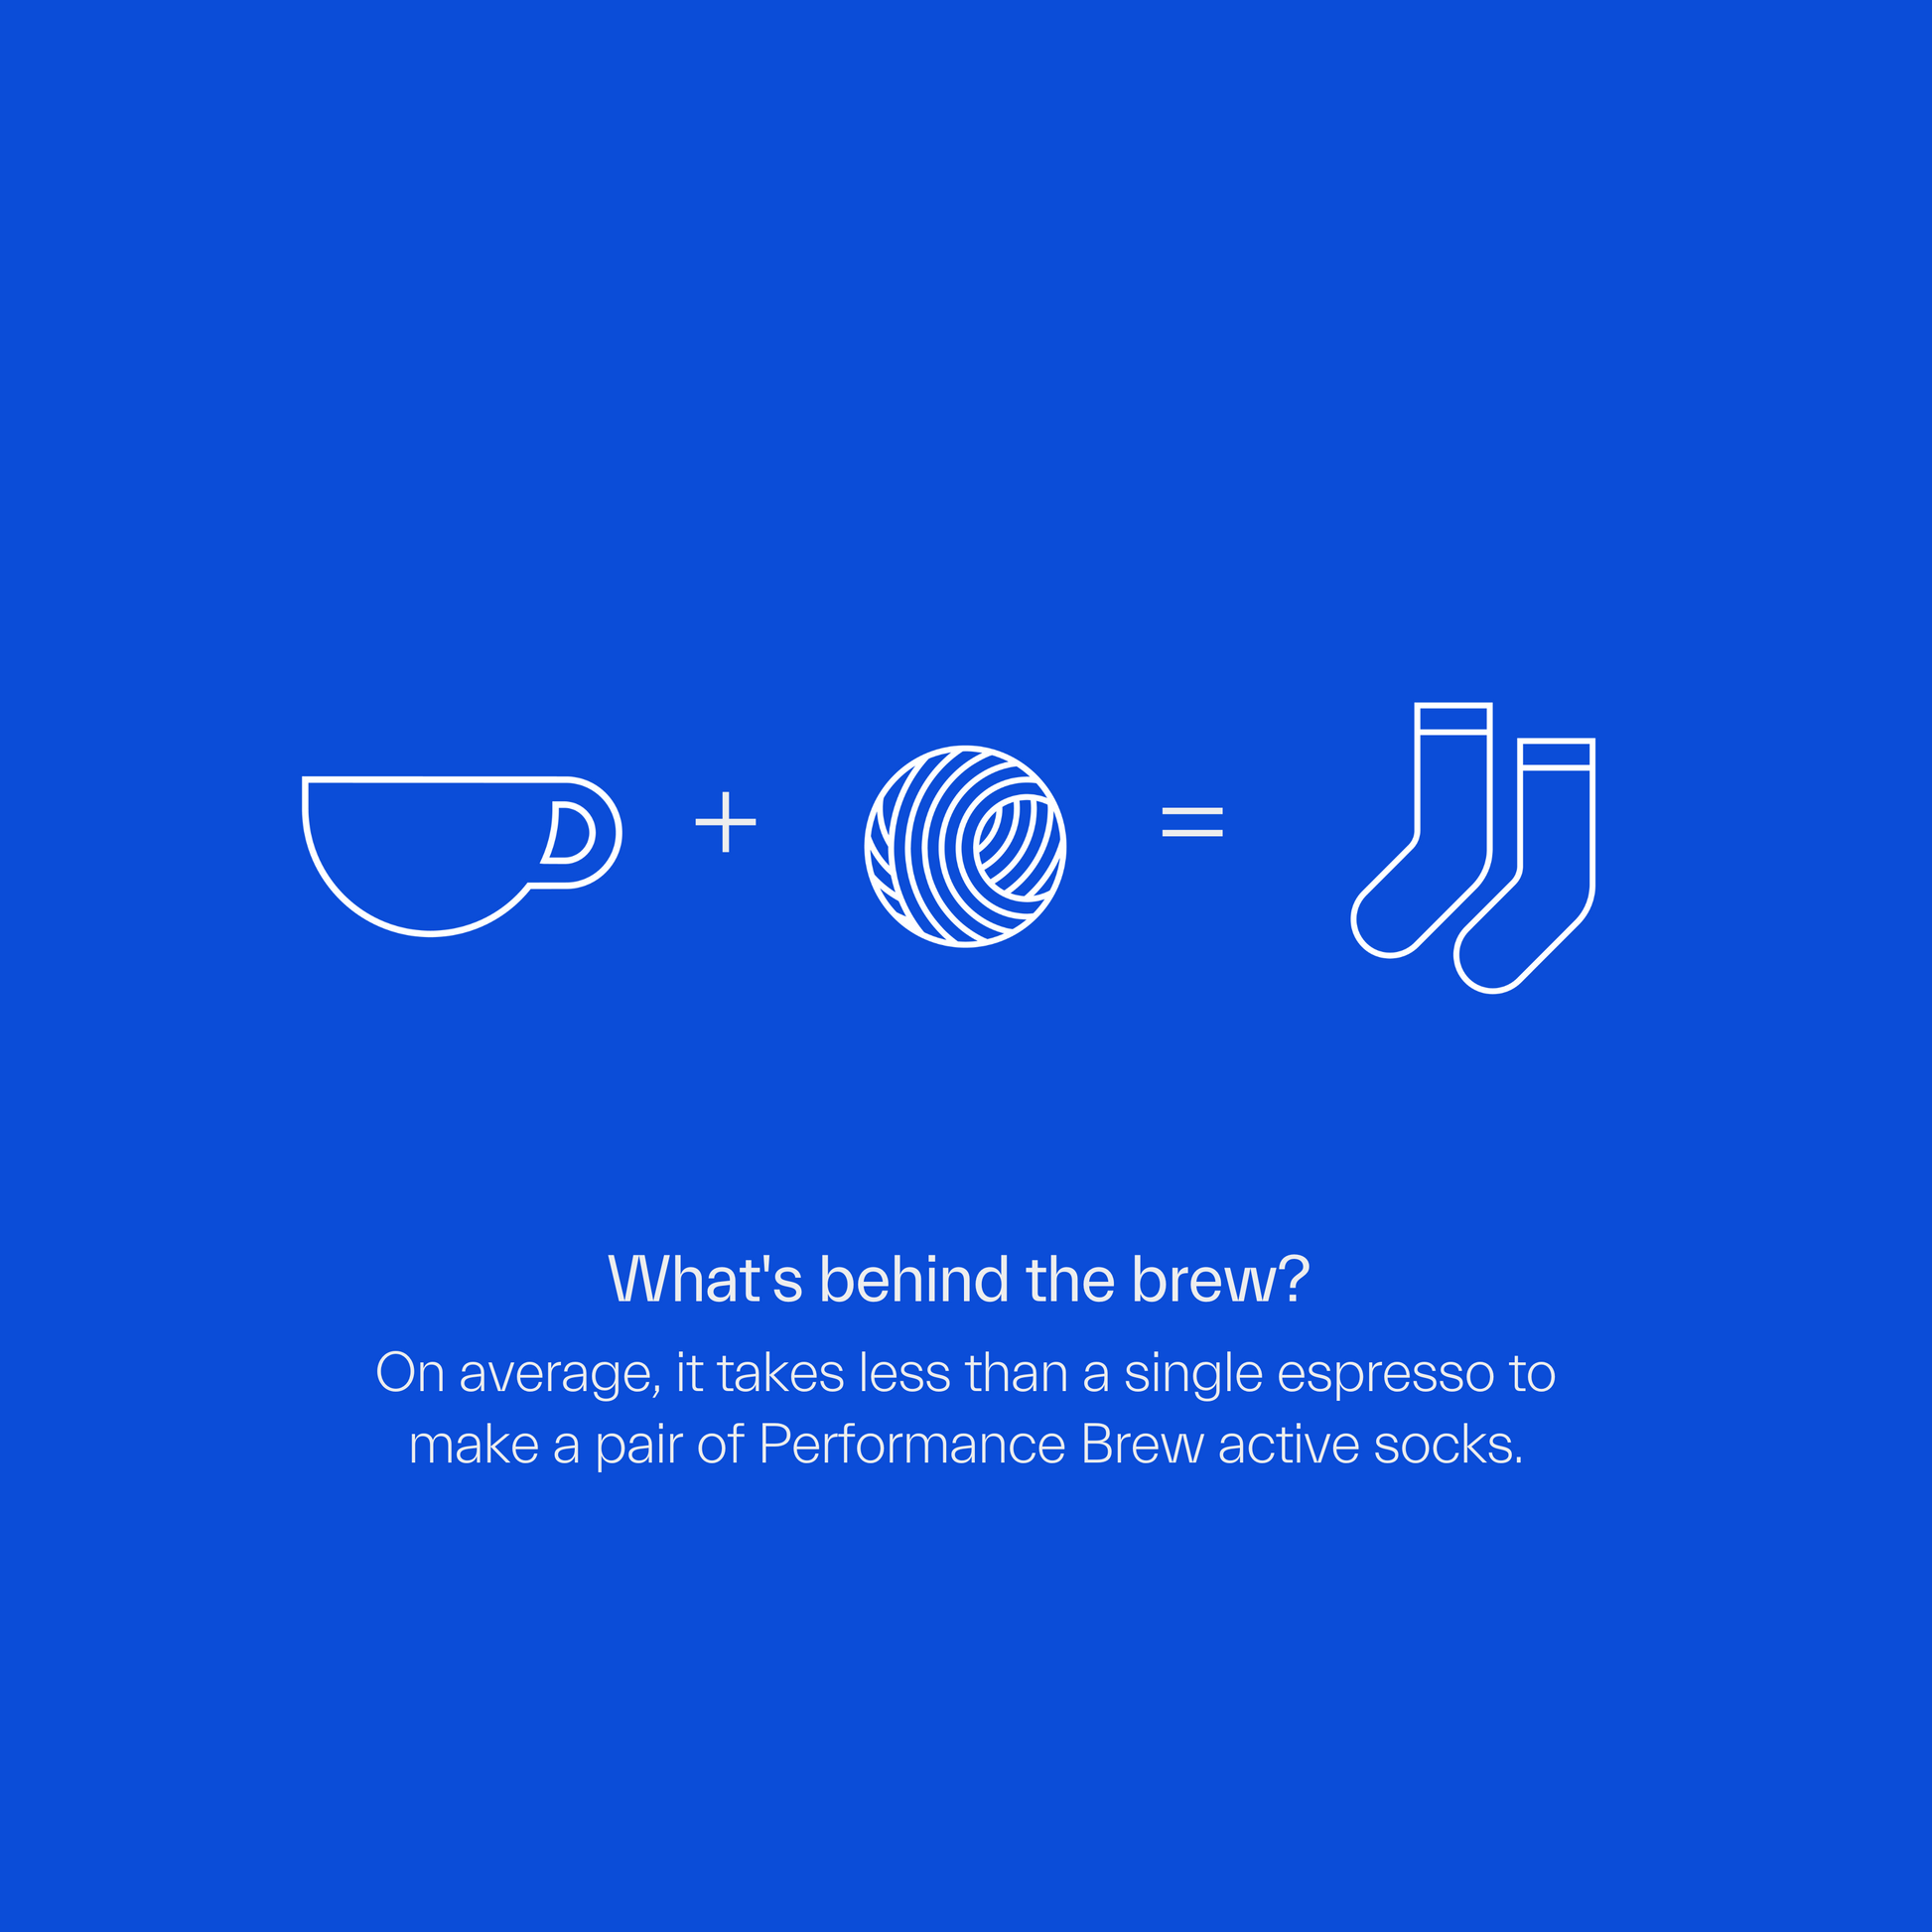 The Active PerformanceBrew Socks